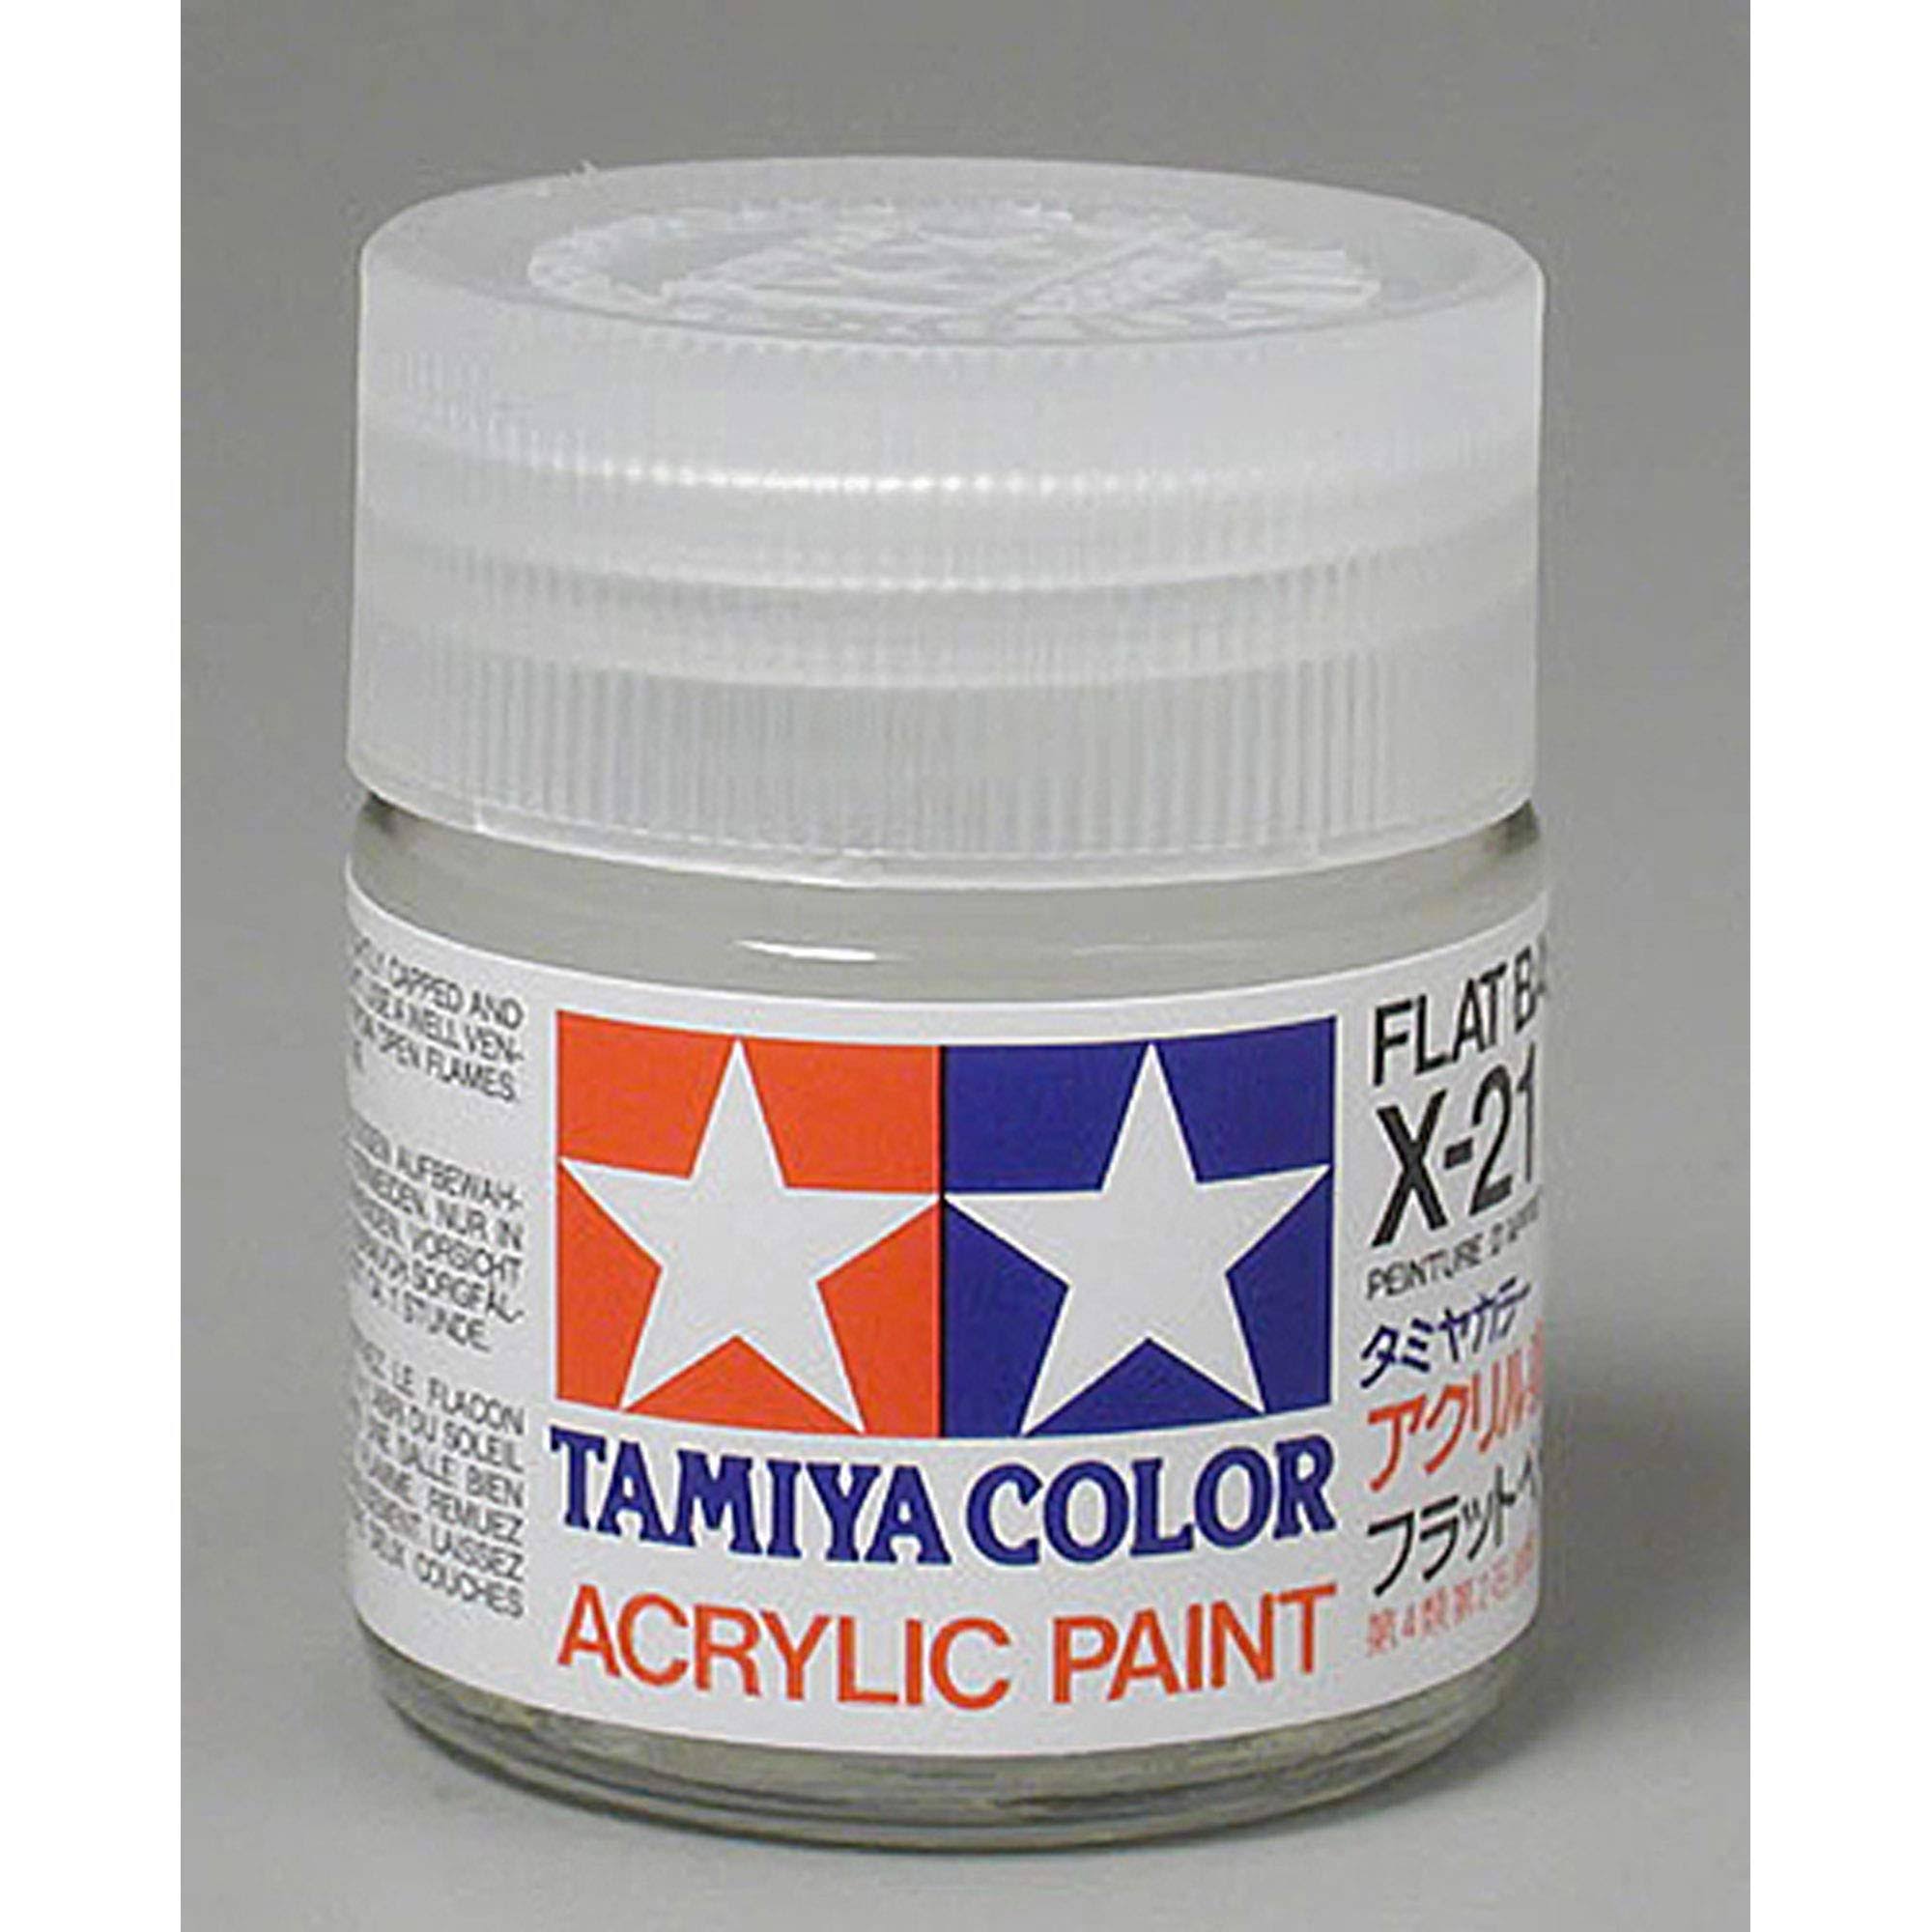 Tamiya TAM81021 Acrylic X21 Flat Base